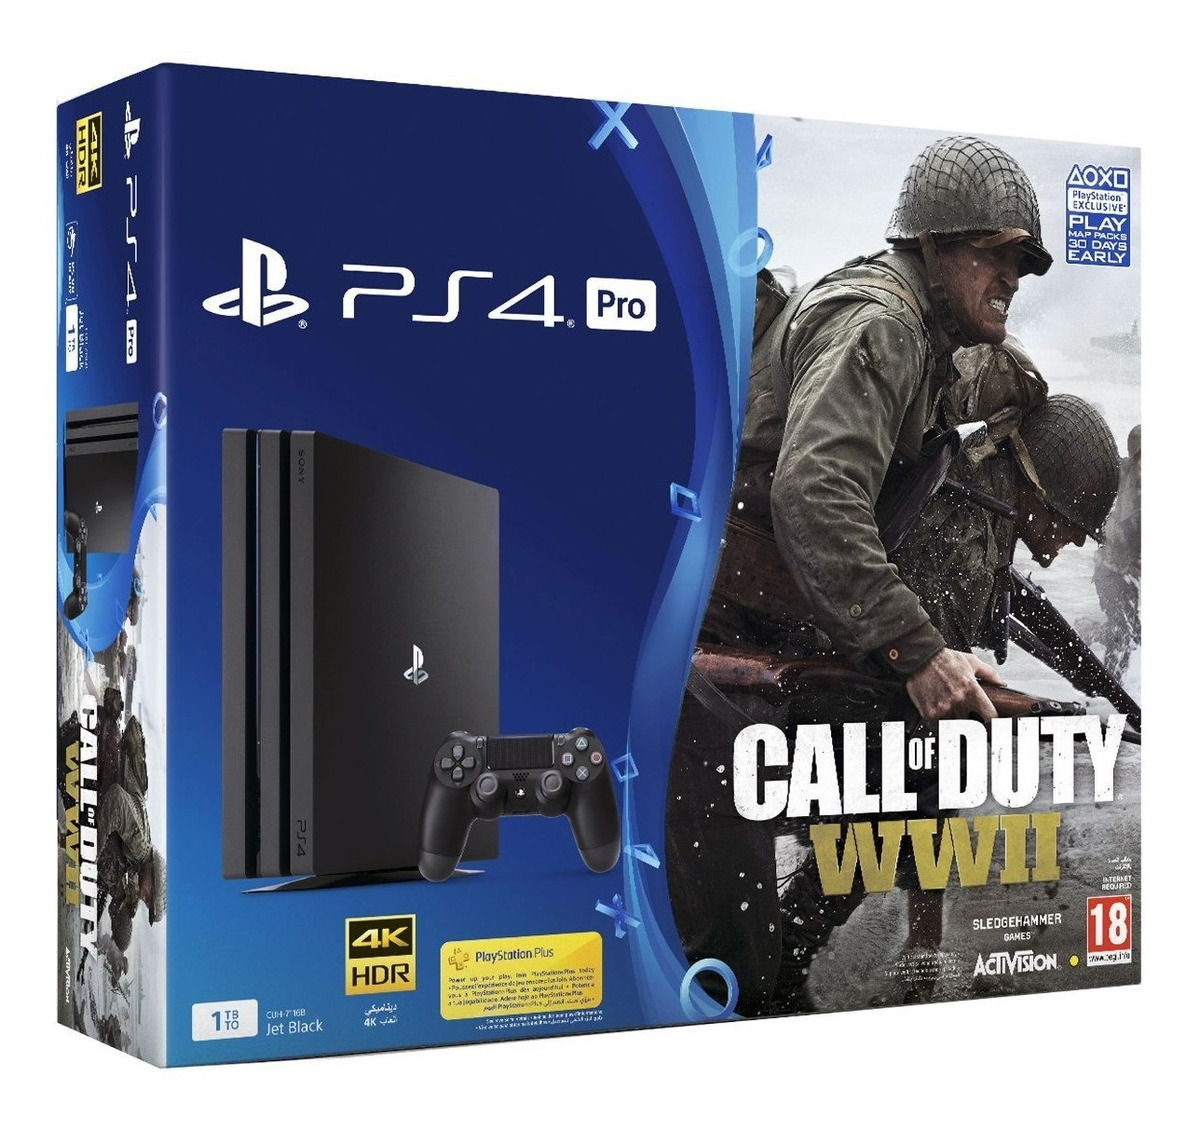 Playstation Pro Mas Call Of Duty Wii - U$S 669,00 en ...